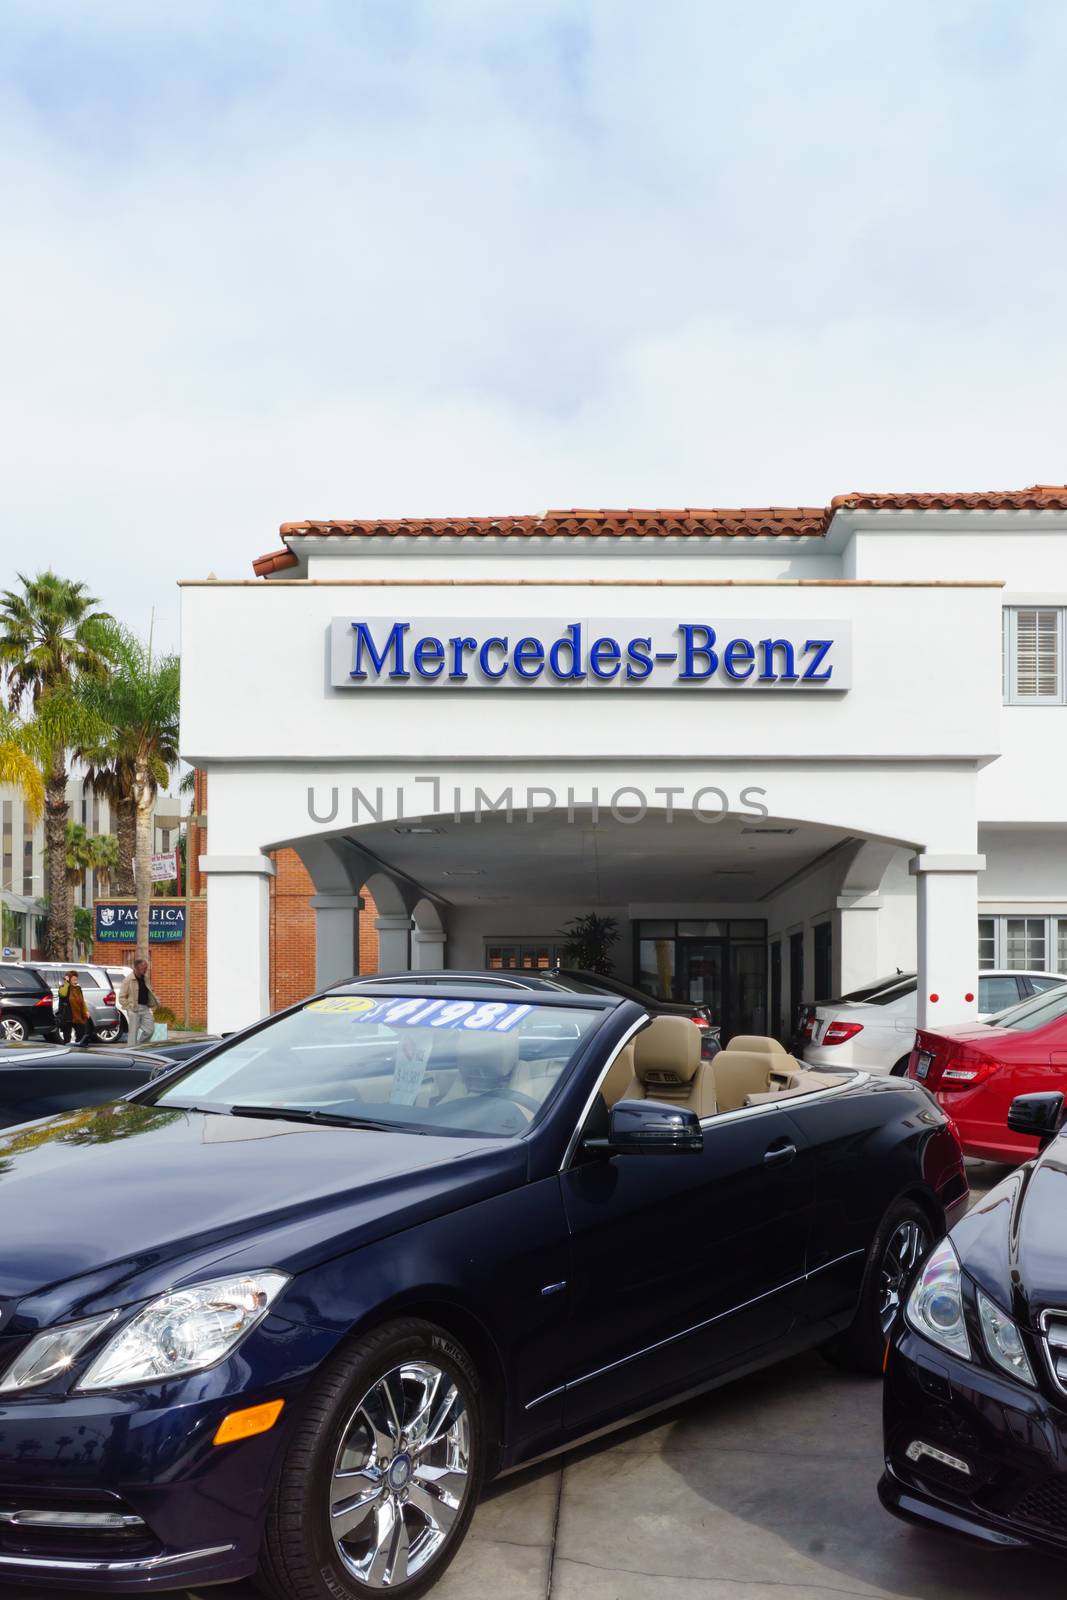 Mercedes-Benz Automobile Dealership by wolterk